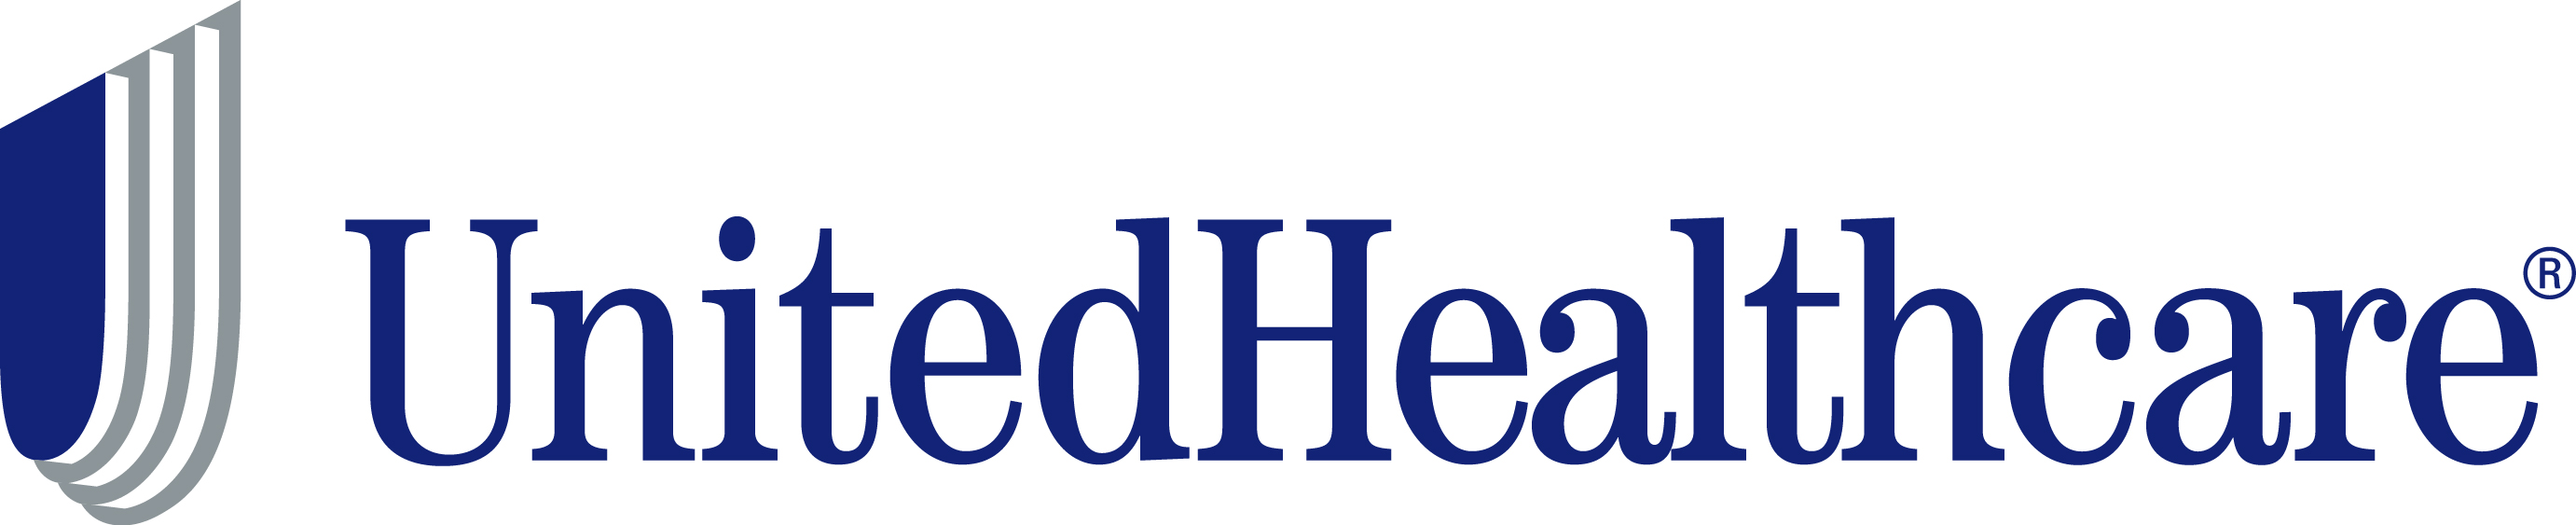 United Healthcare Logo 2018